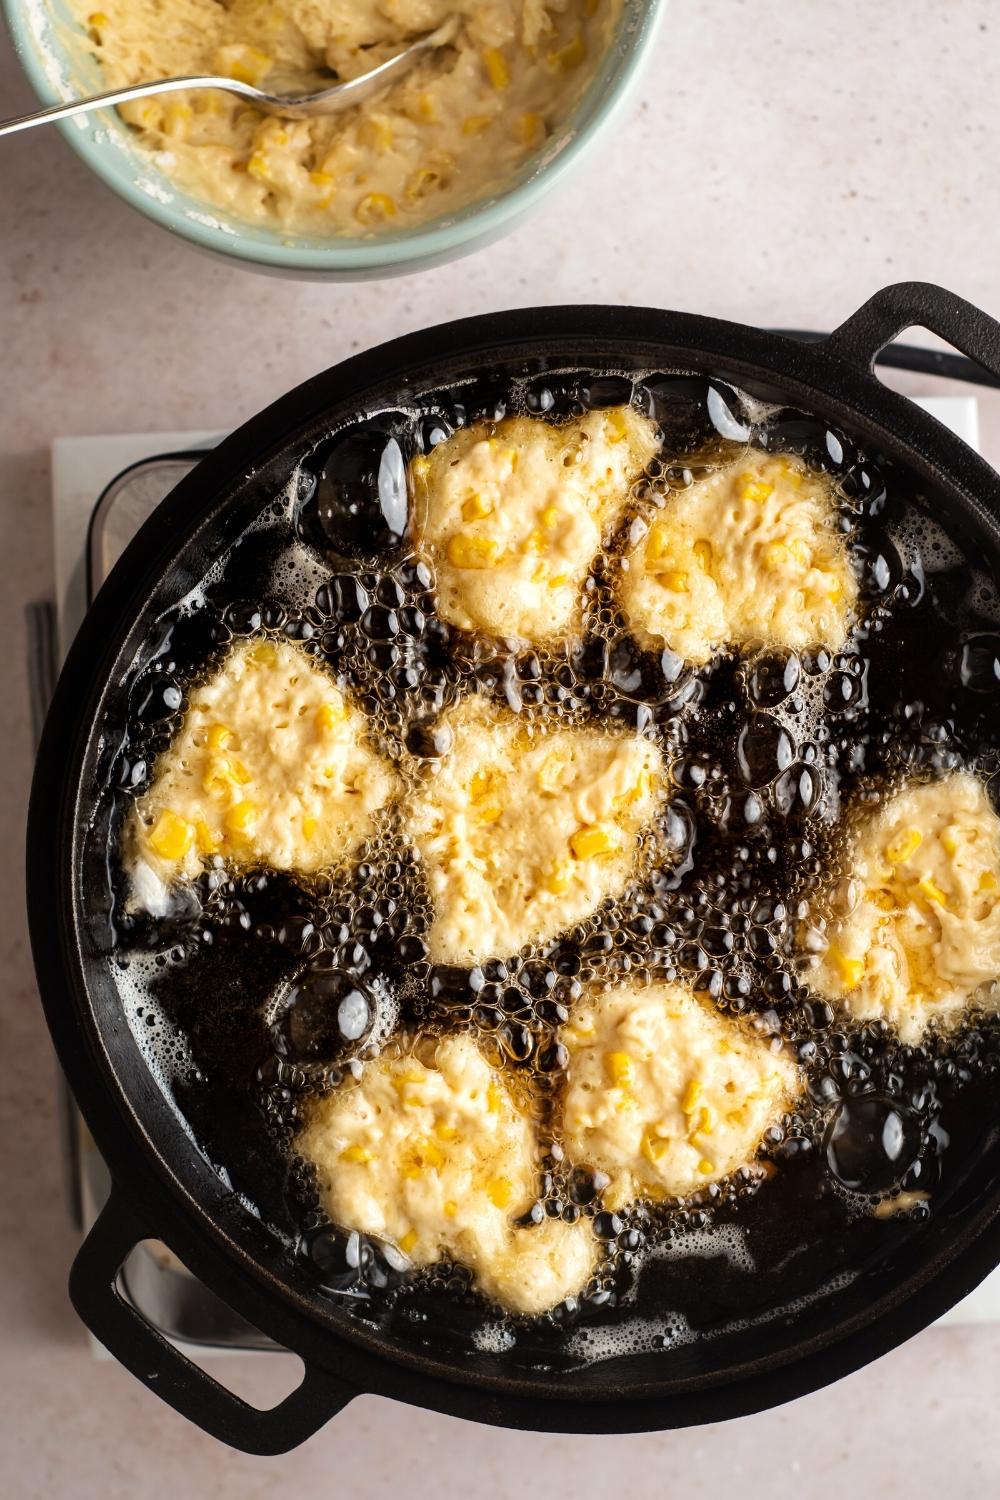 Seven corn nuggets frying in oil in a frying pan.